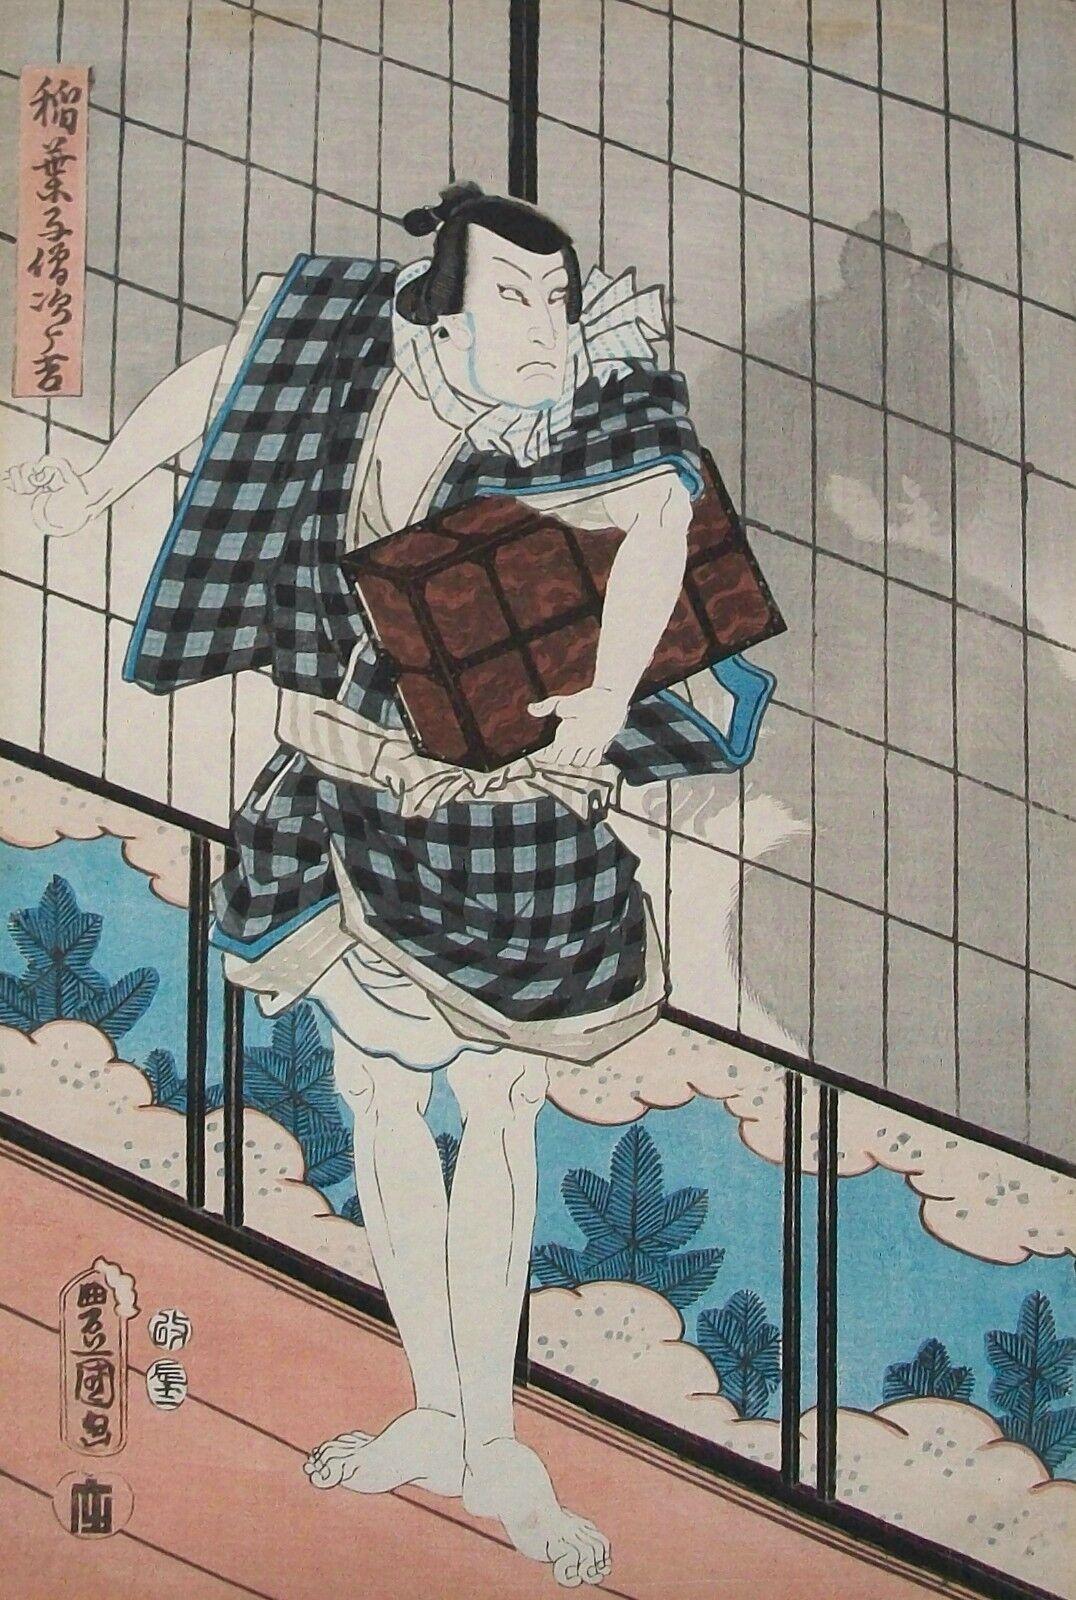 UTAGAWA KUNISADA (TOYOKUNI III 1786-1865) - 'Nezumi Kozo' (le 'Robin des Bois' japonais) - Rare gravure ancienne sur bois - Ichikawa Kodanji IV jouant le rôle de Nezumi Kozo dans la pièce 'Yedo Ichimura-za' Nezumi Komon Haruno Shingata - estampe